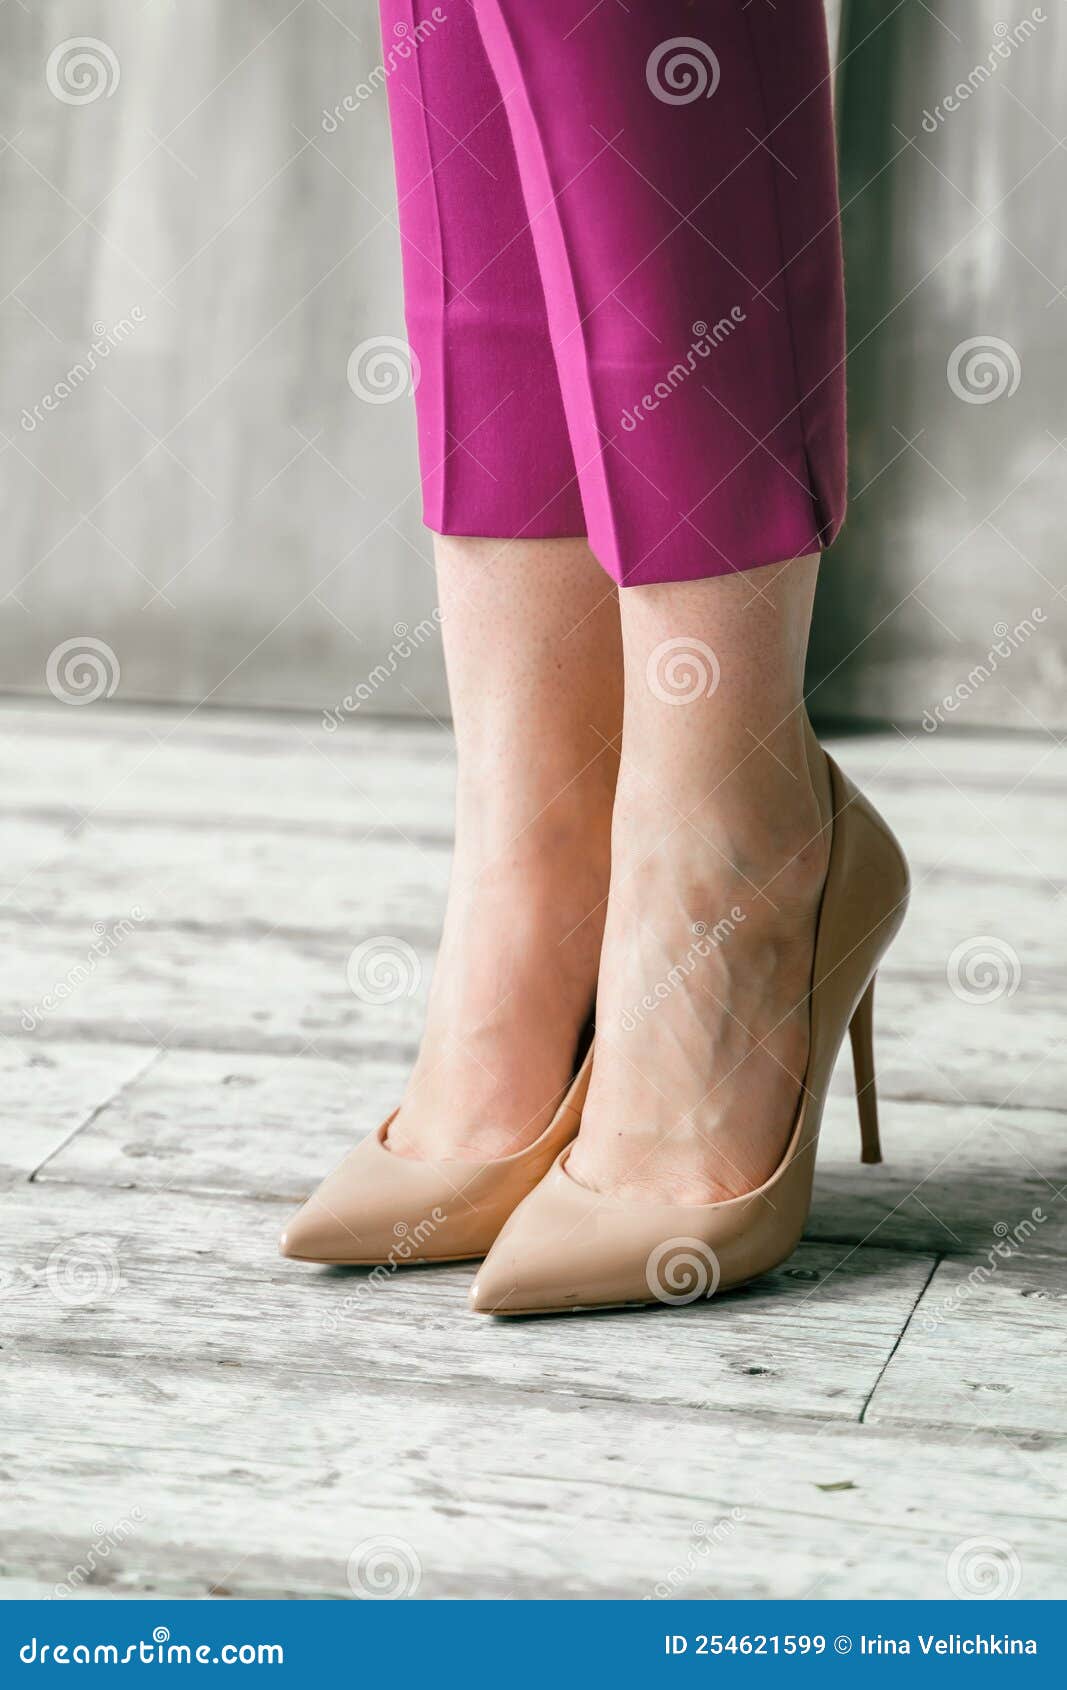 Versace Medusa Head Pumps | Shoes women heels, Pumps heels, Versace shoes  heels